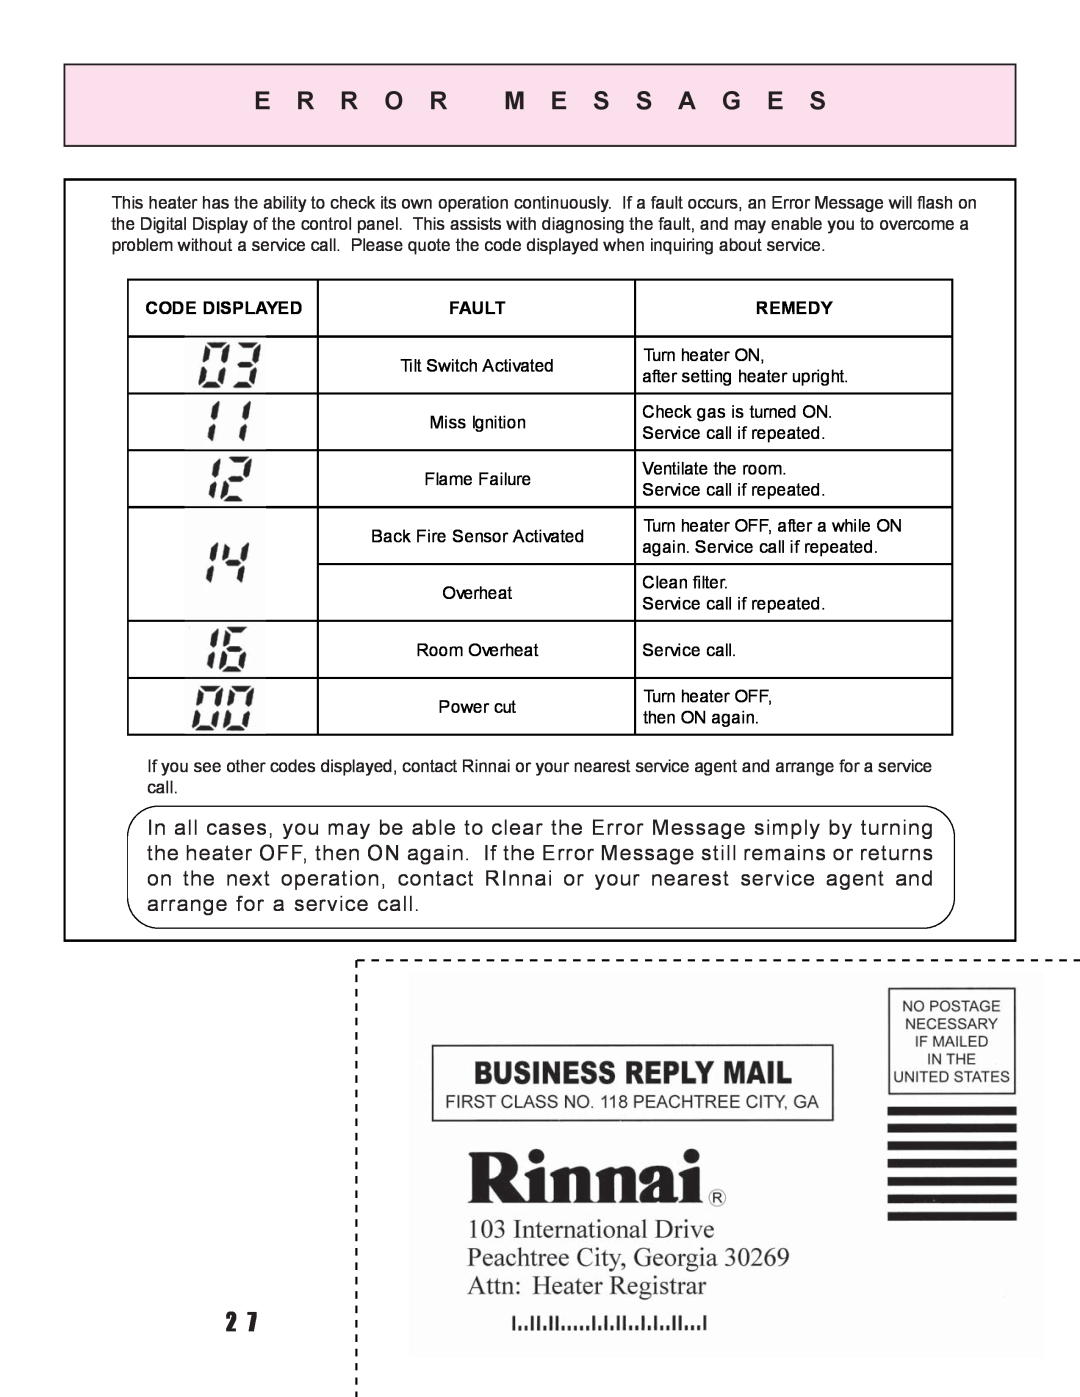 Rinnai RCE-229A installation instructions E R R O R M E S S A G E S, Code Displayed, Fault, Remedy 